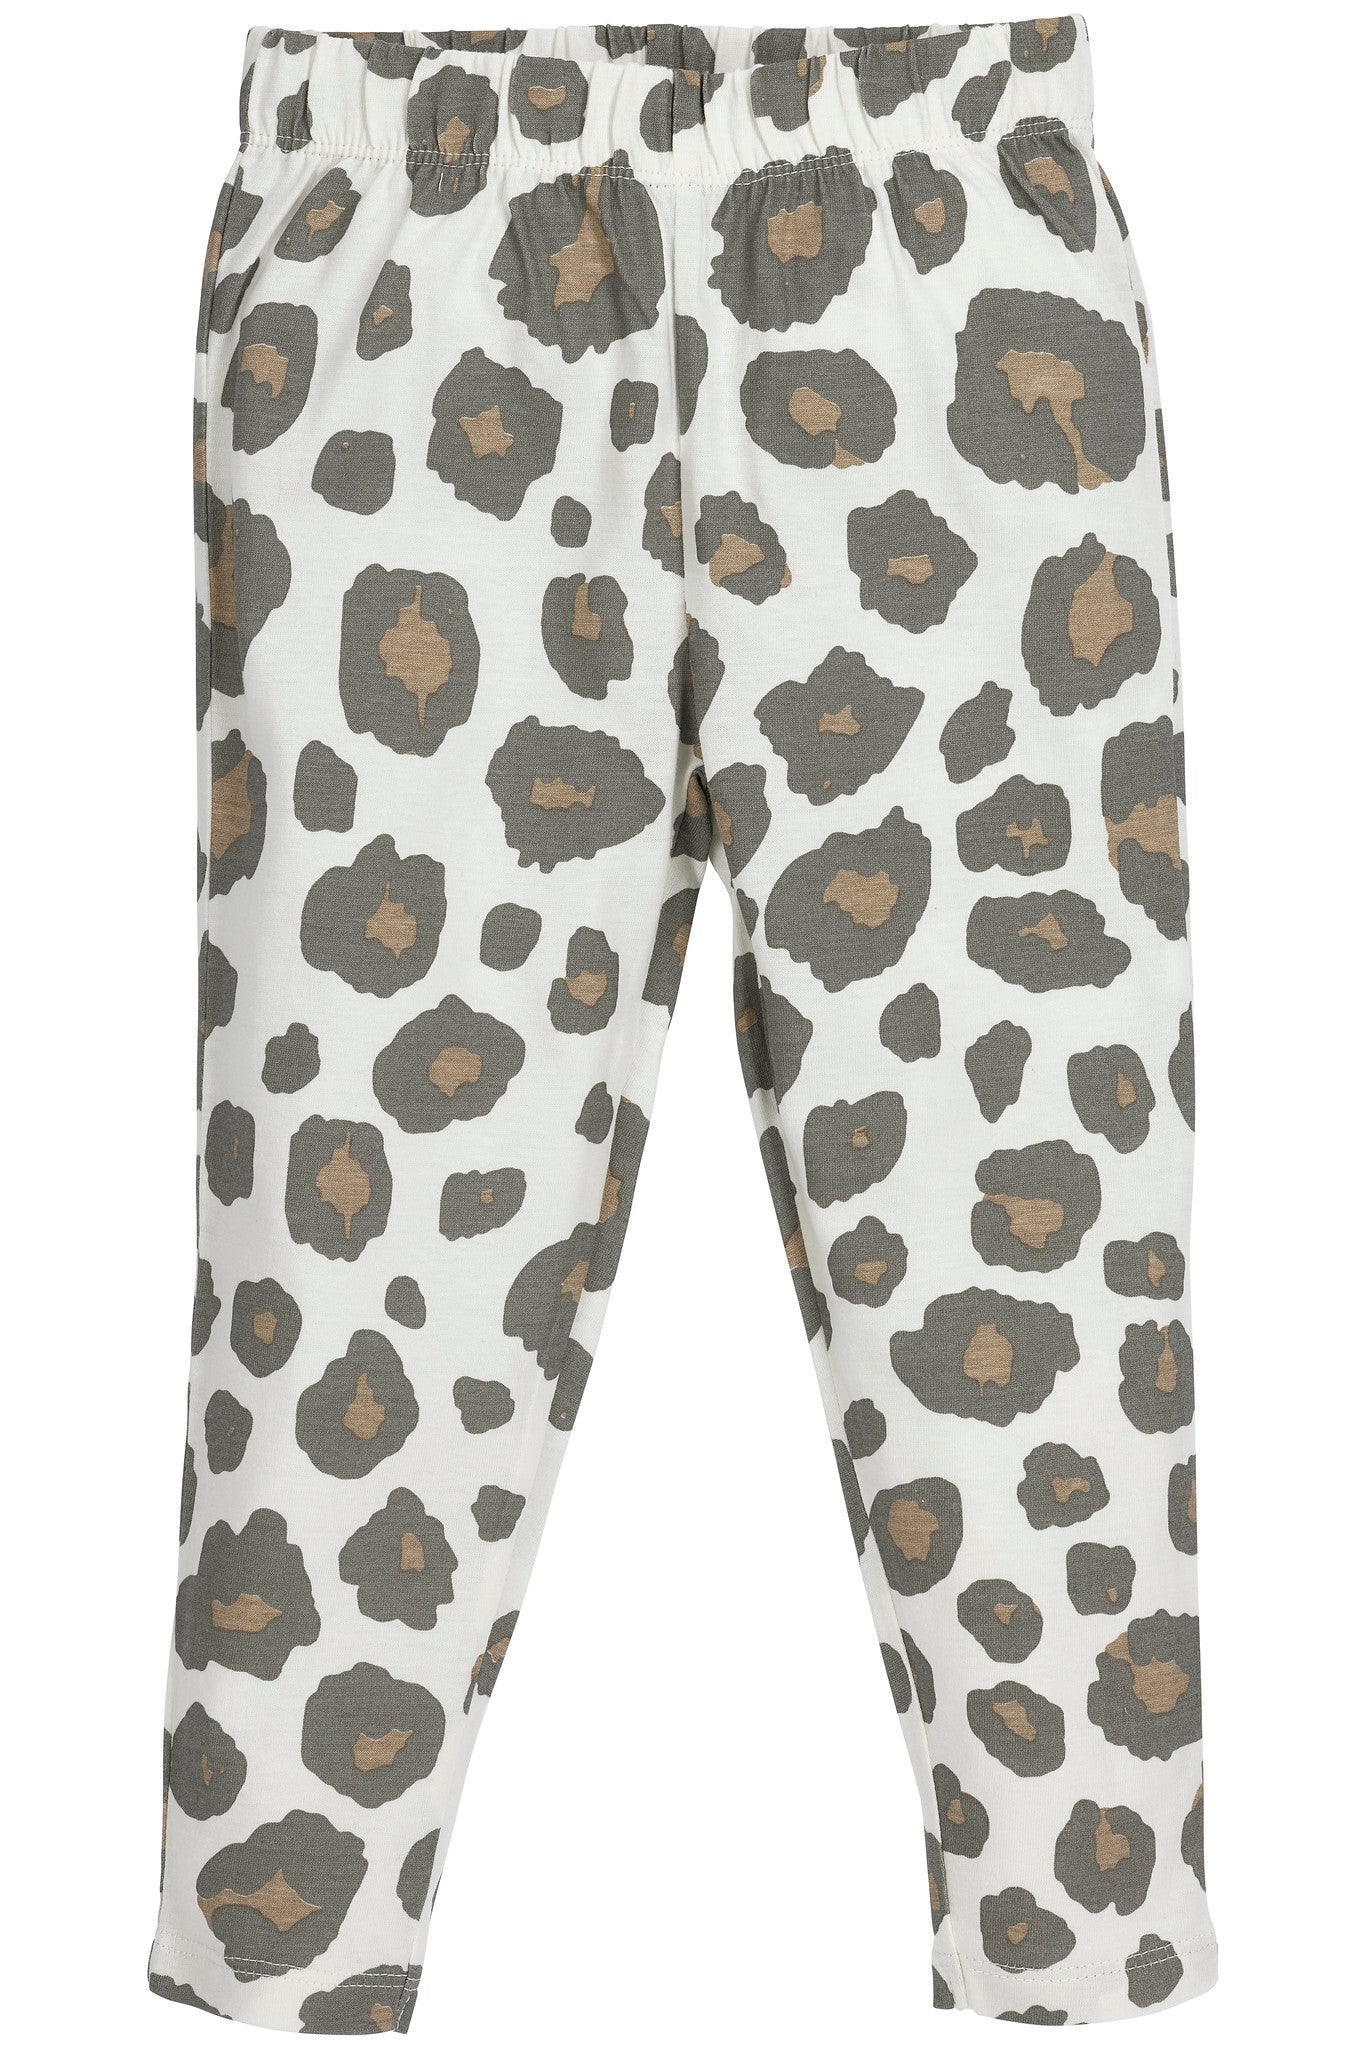 Pajama Panther - size 50/56